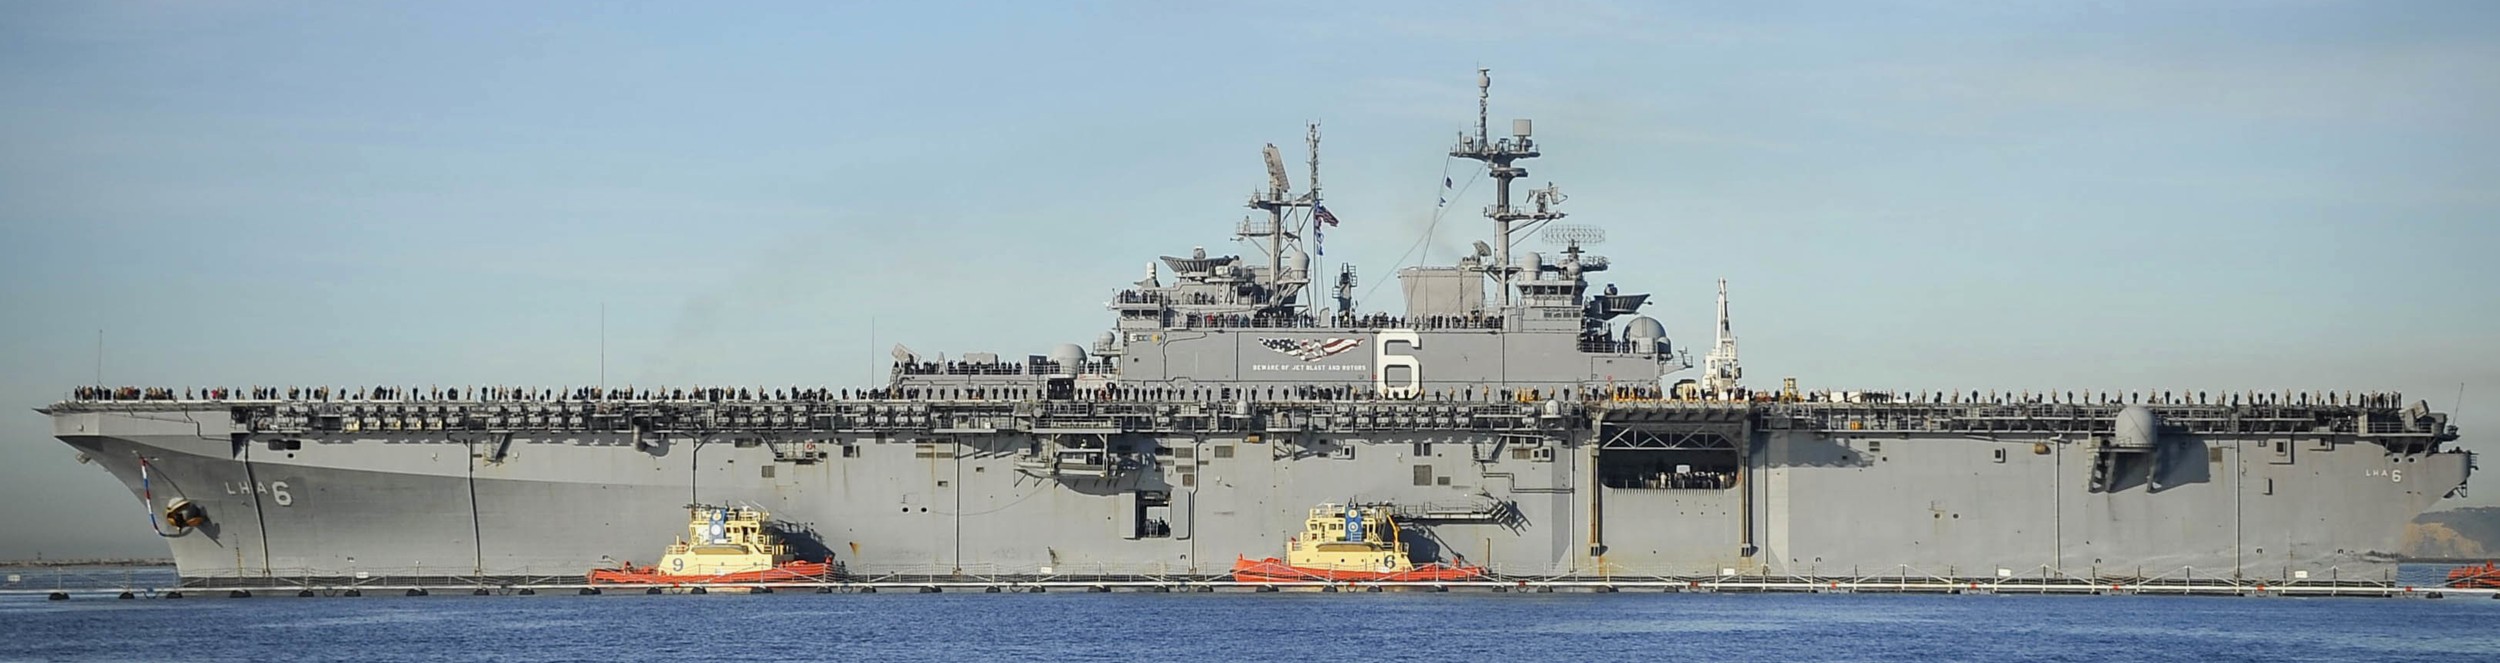 lha-6 uss america amphibious assault ship us navy 103